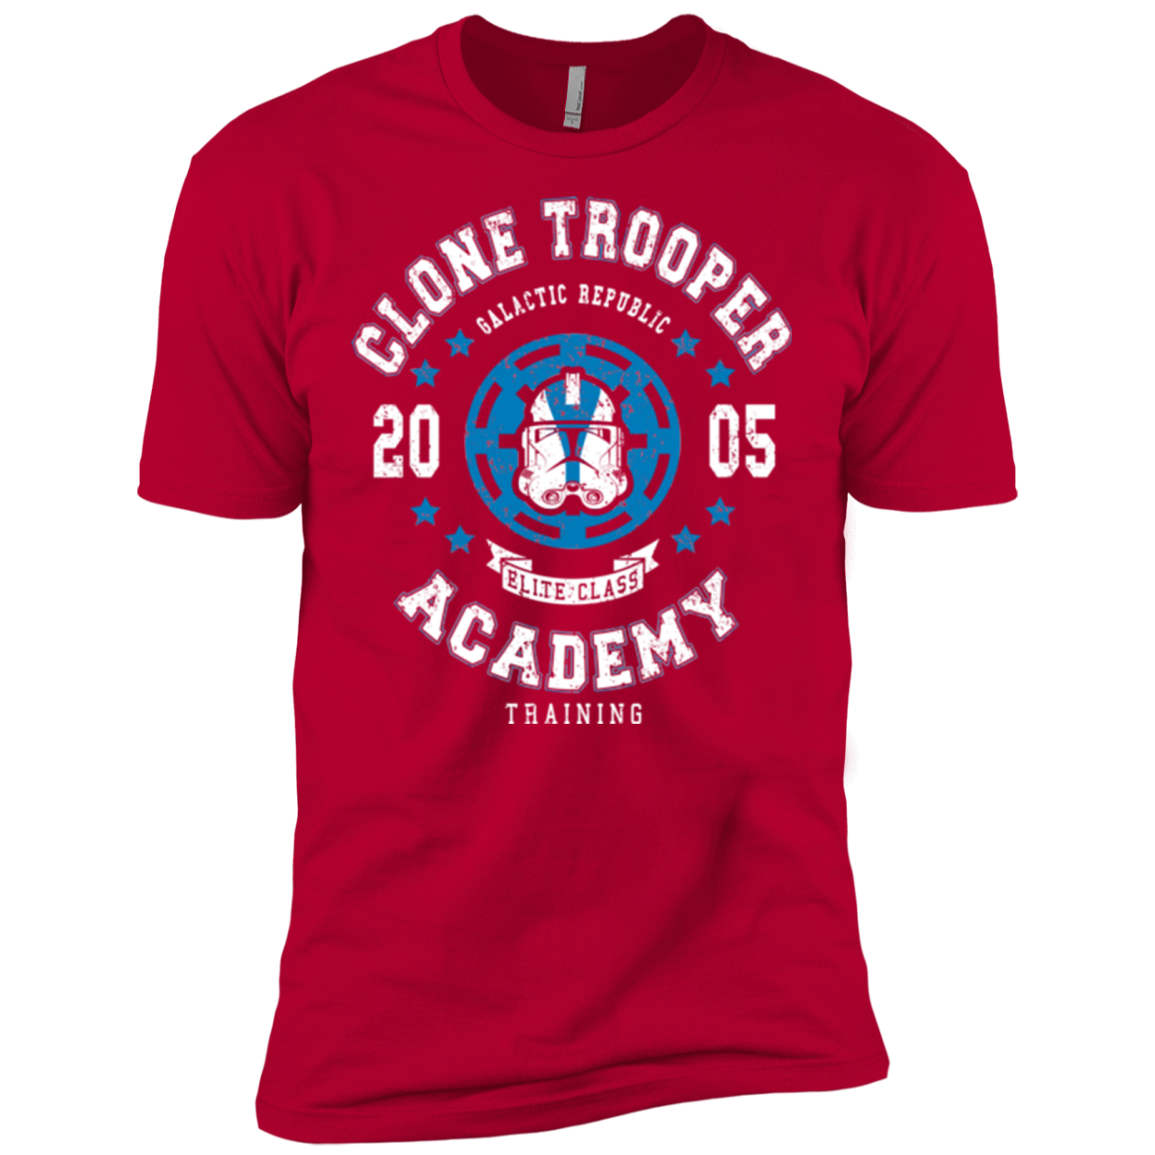 Clone Trooper Academy 05 Men's Premium T-Shirt